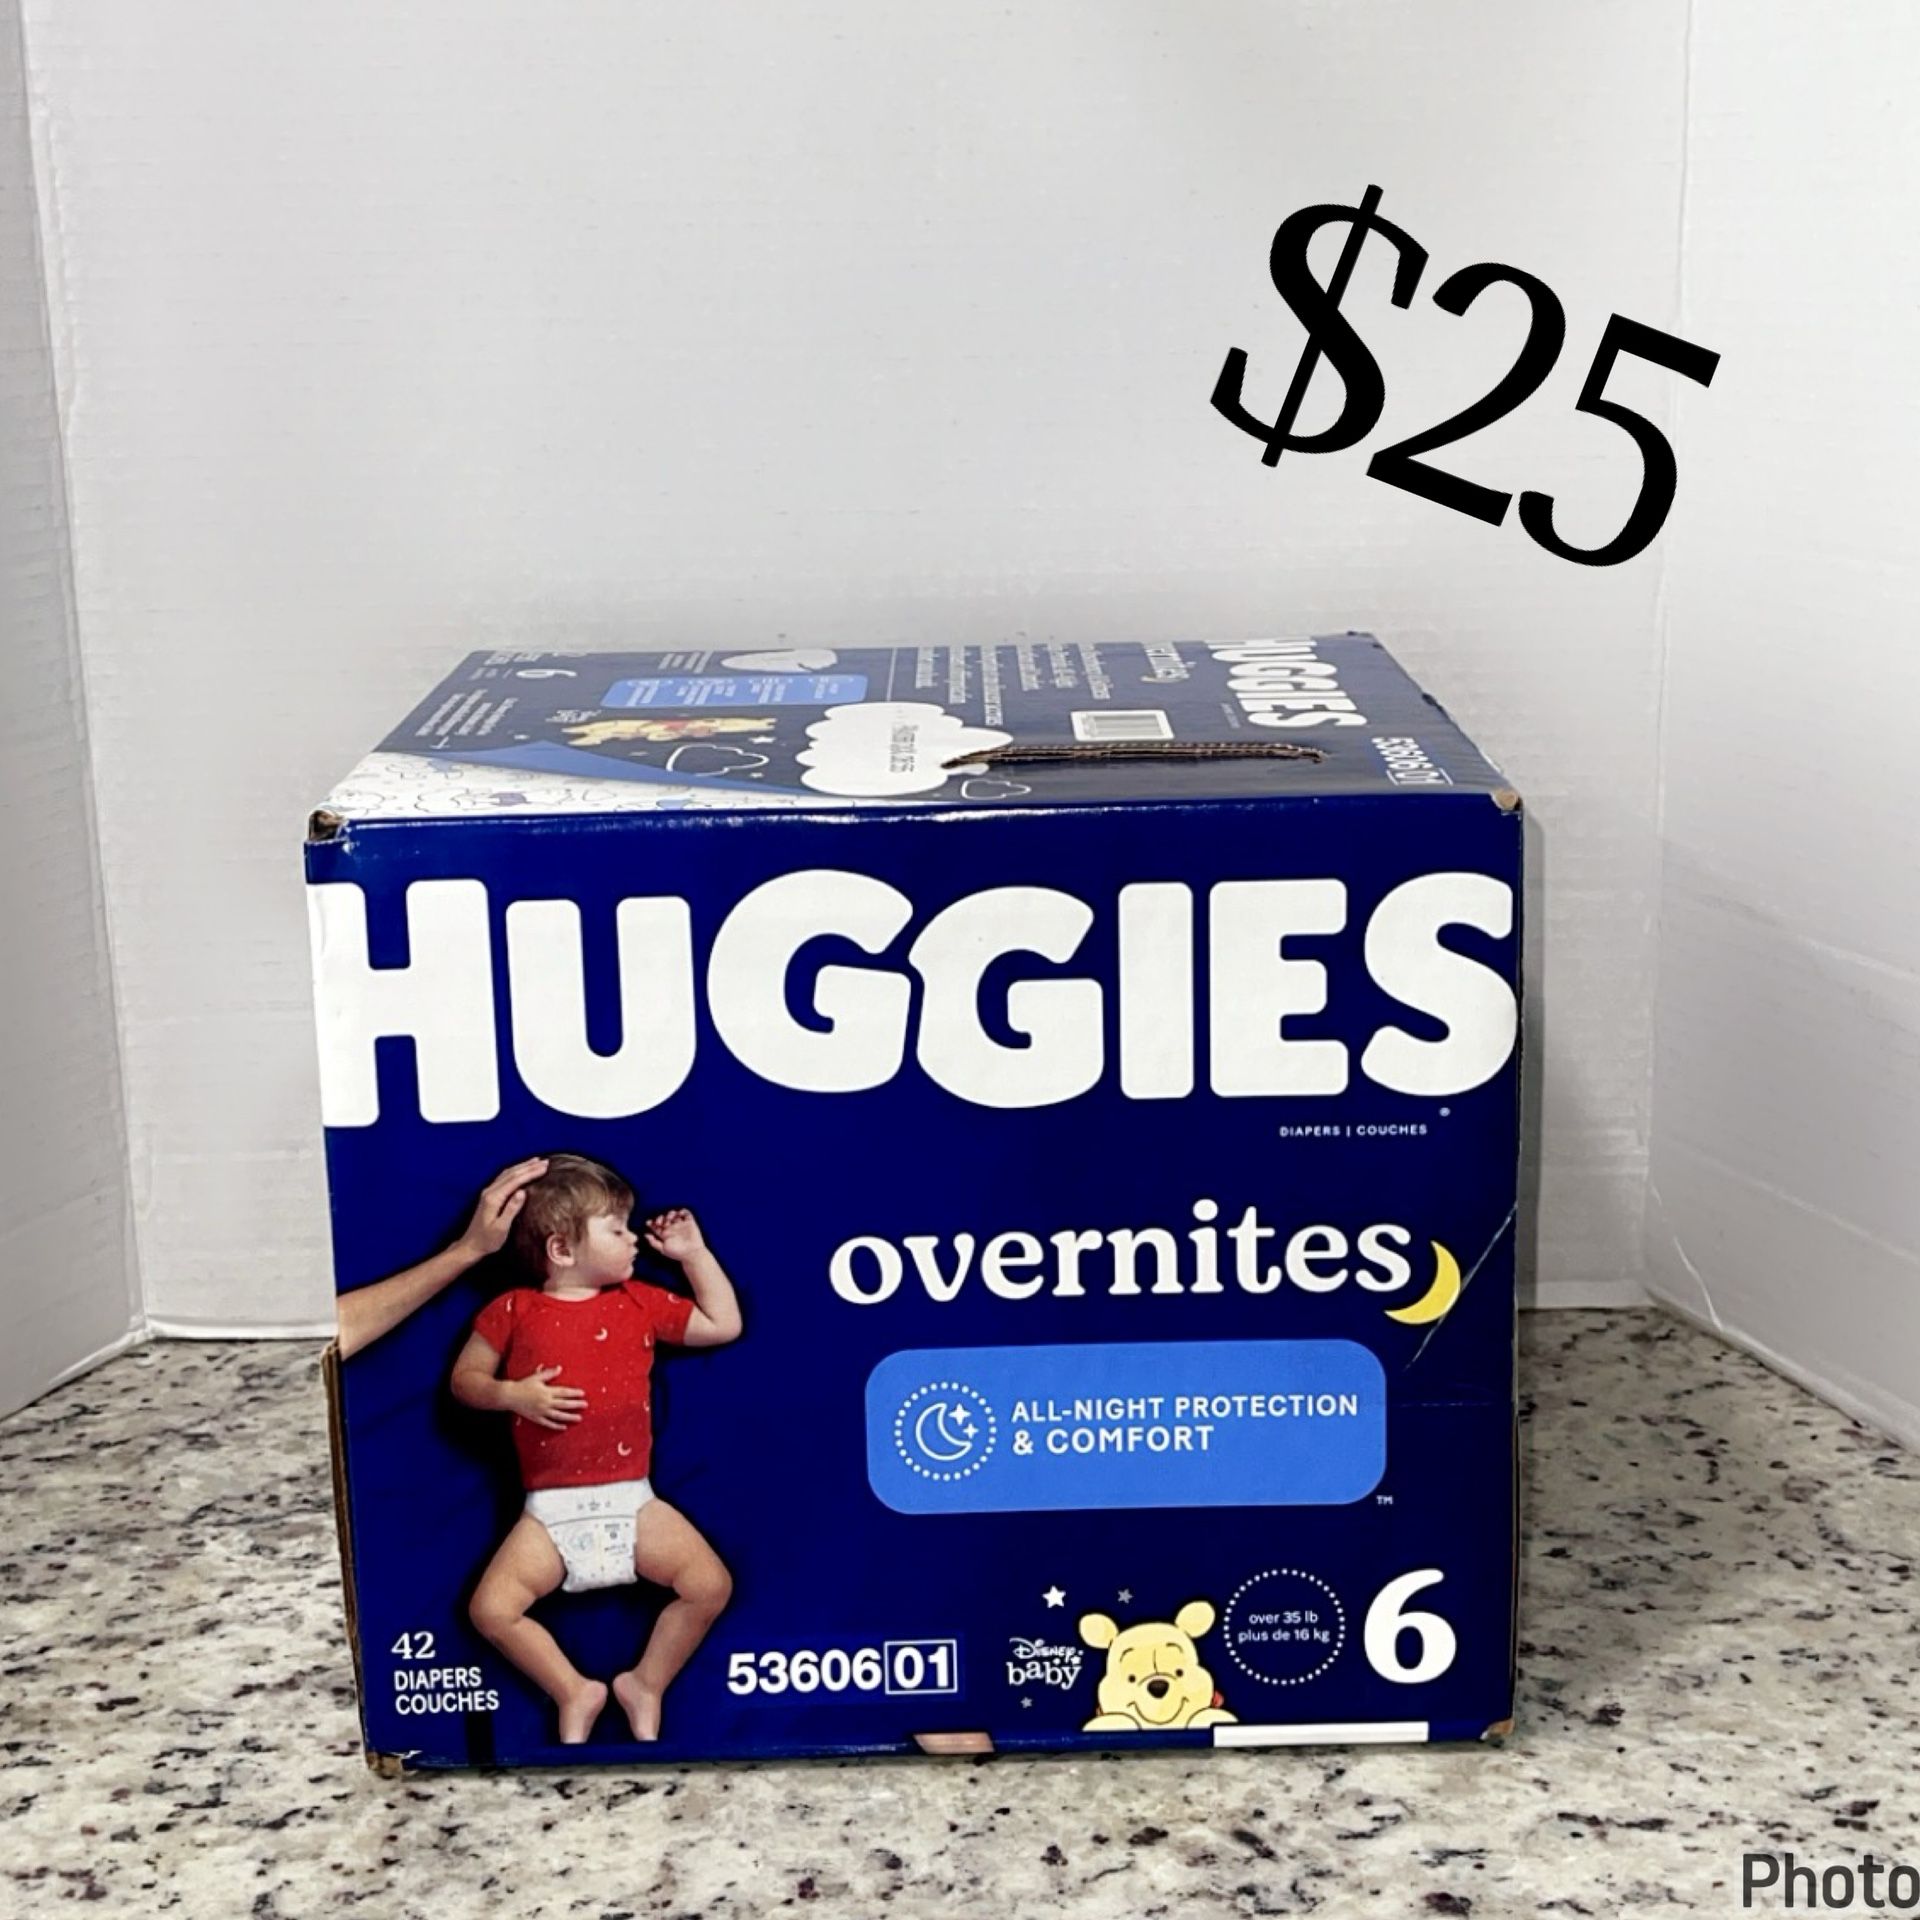 Huggies overnight size 6 